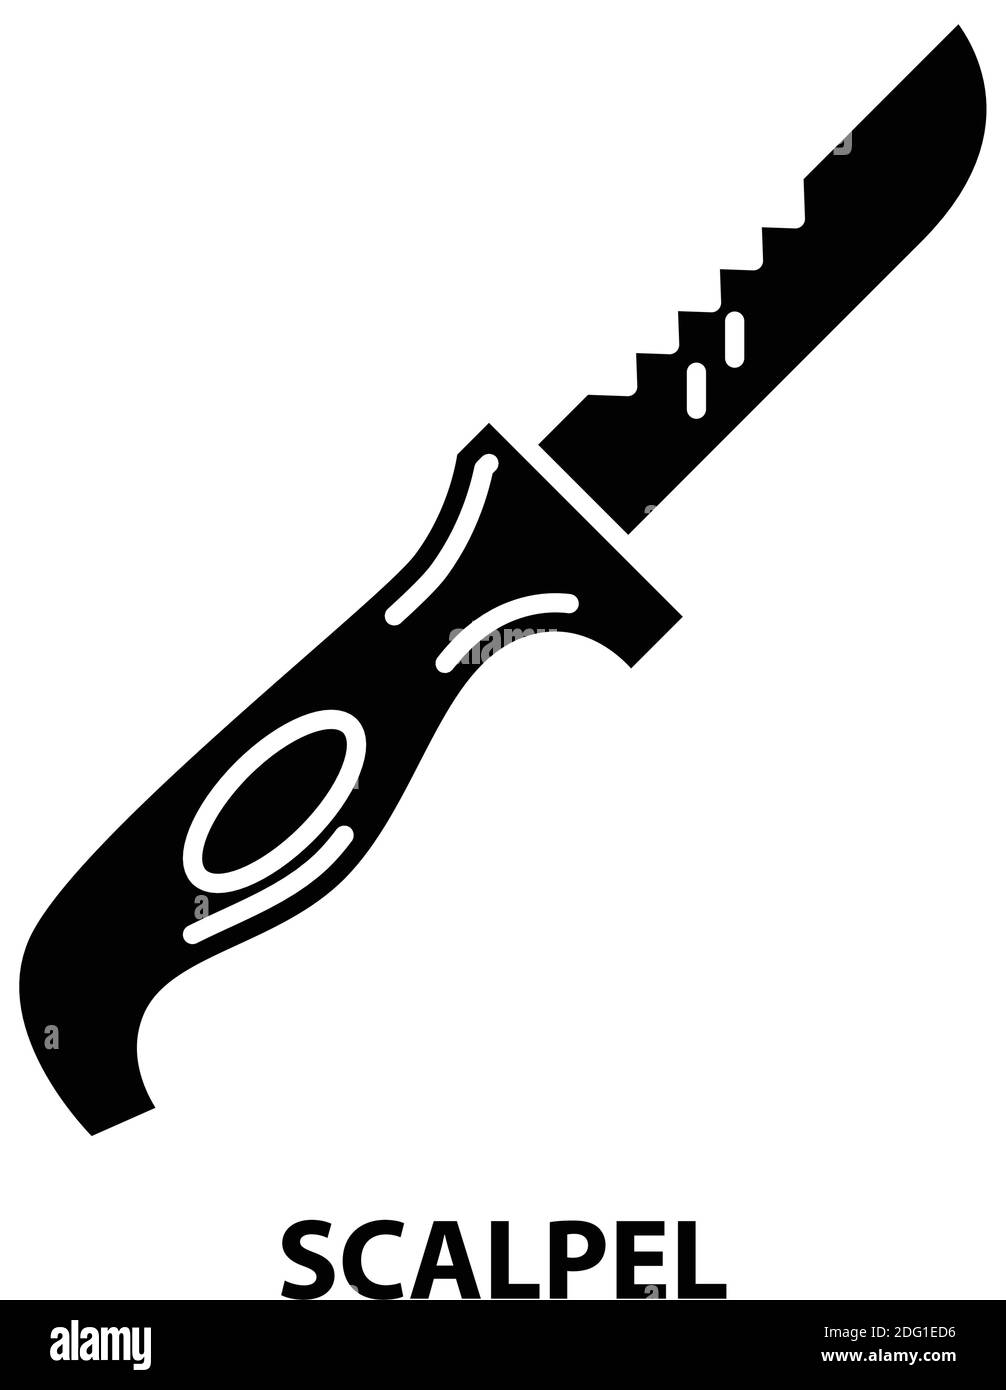 scalpel icon, black vector sign with editable strokes, concept illustration Stock Vector